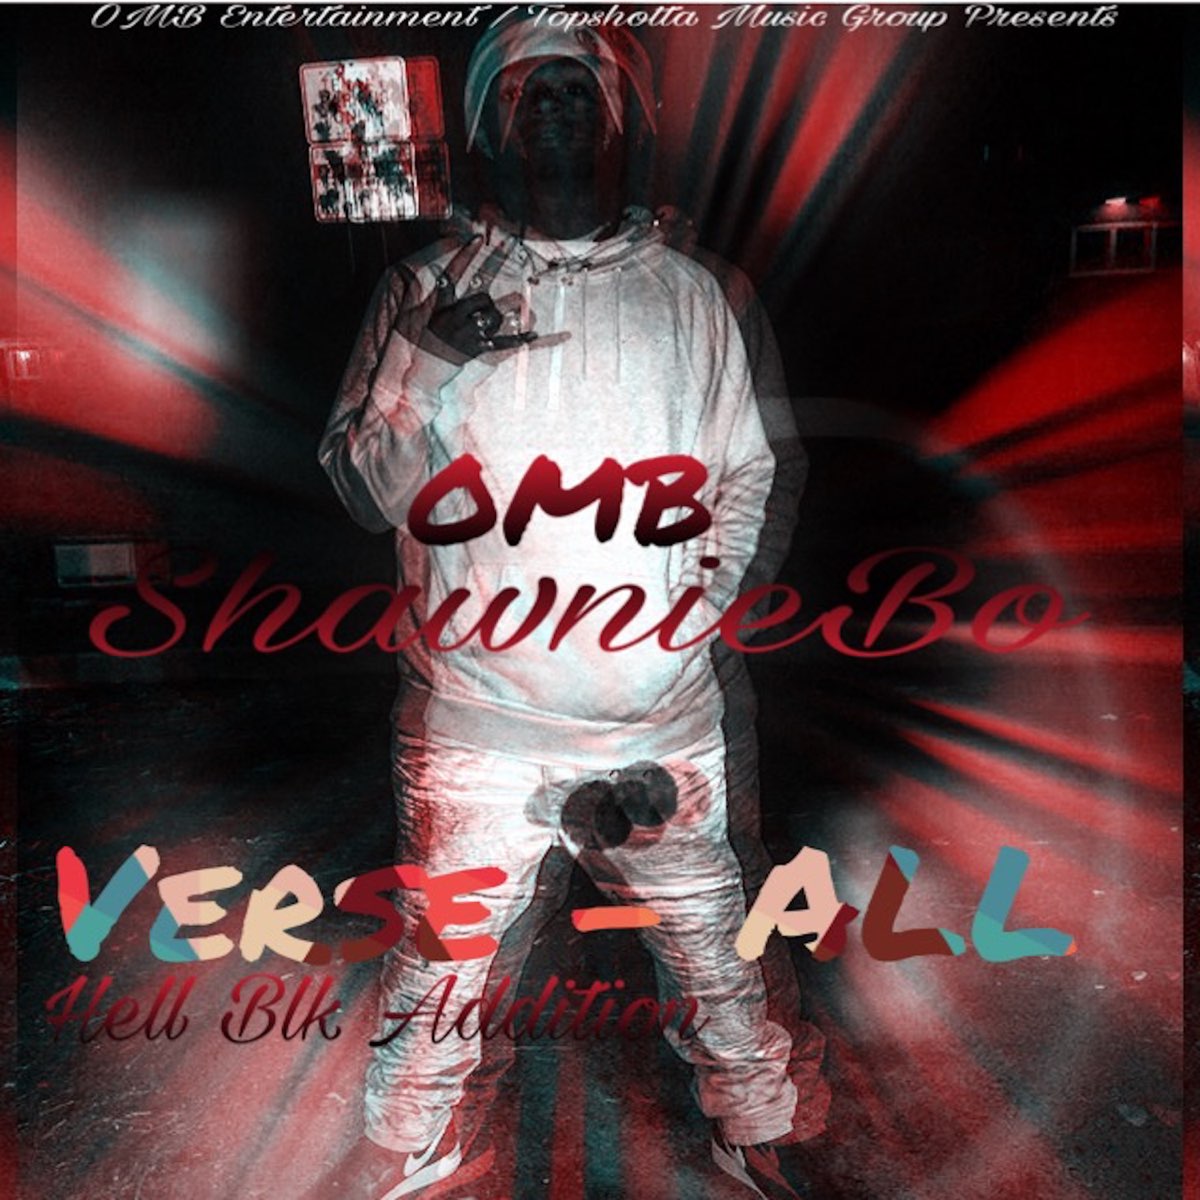 OMB Shawniebo - Verse-All